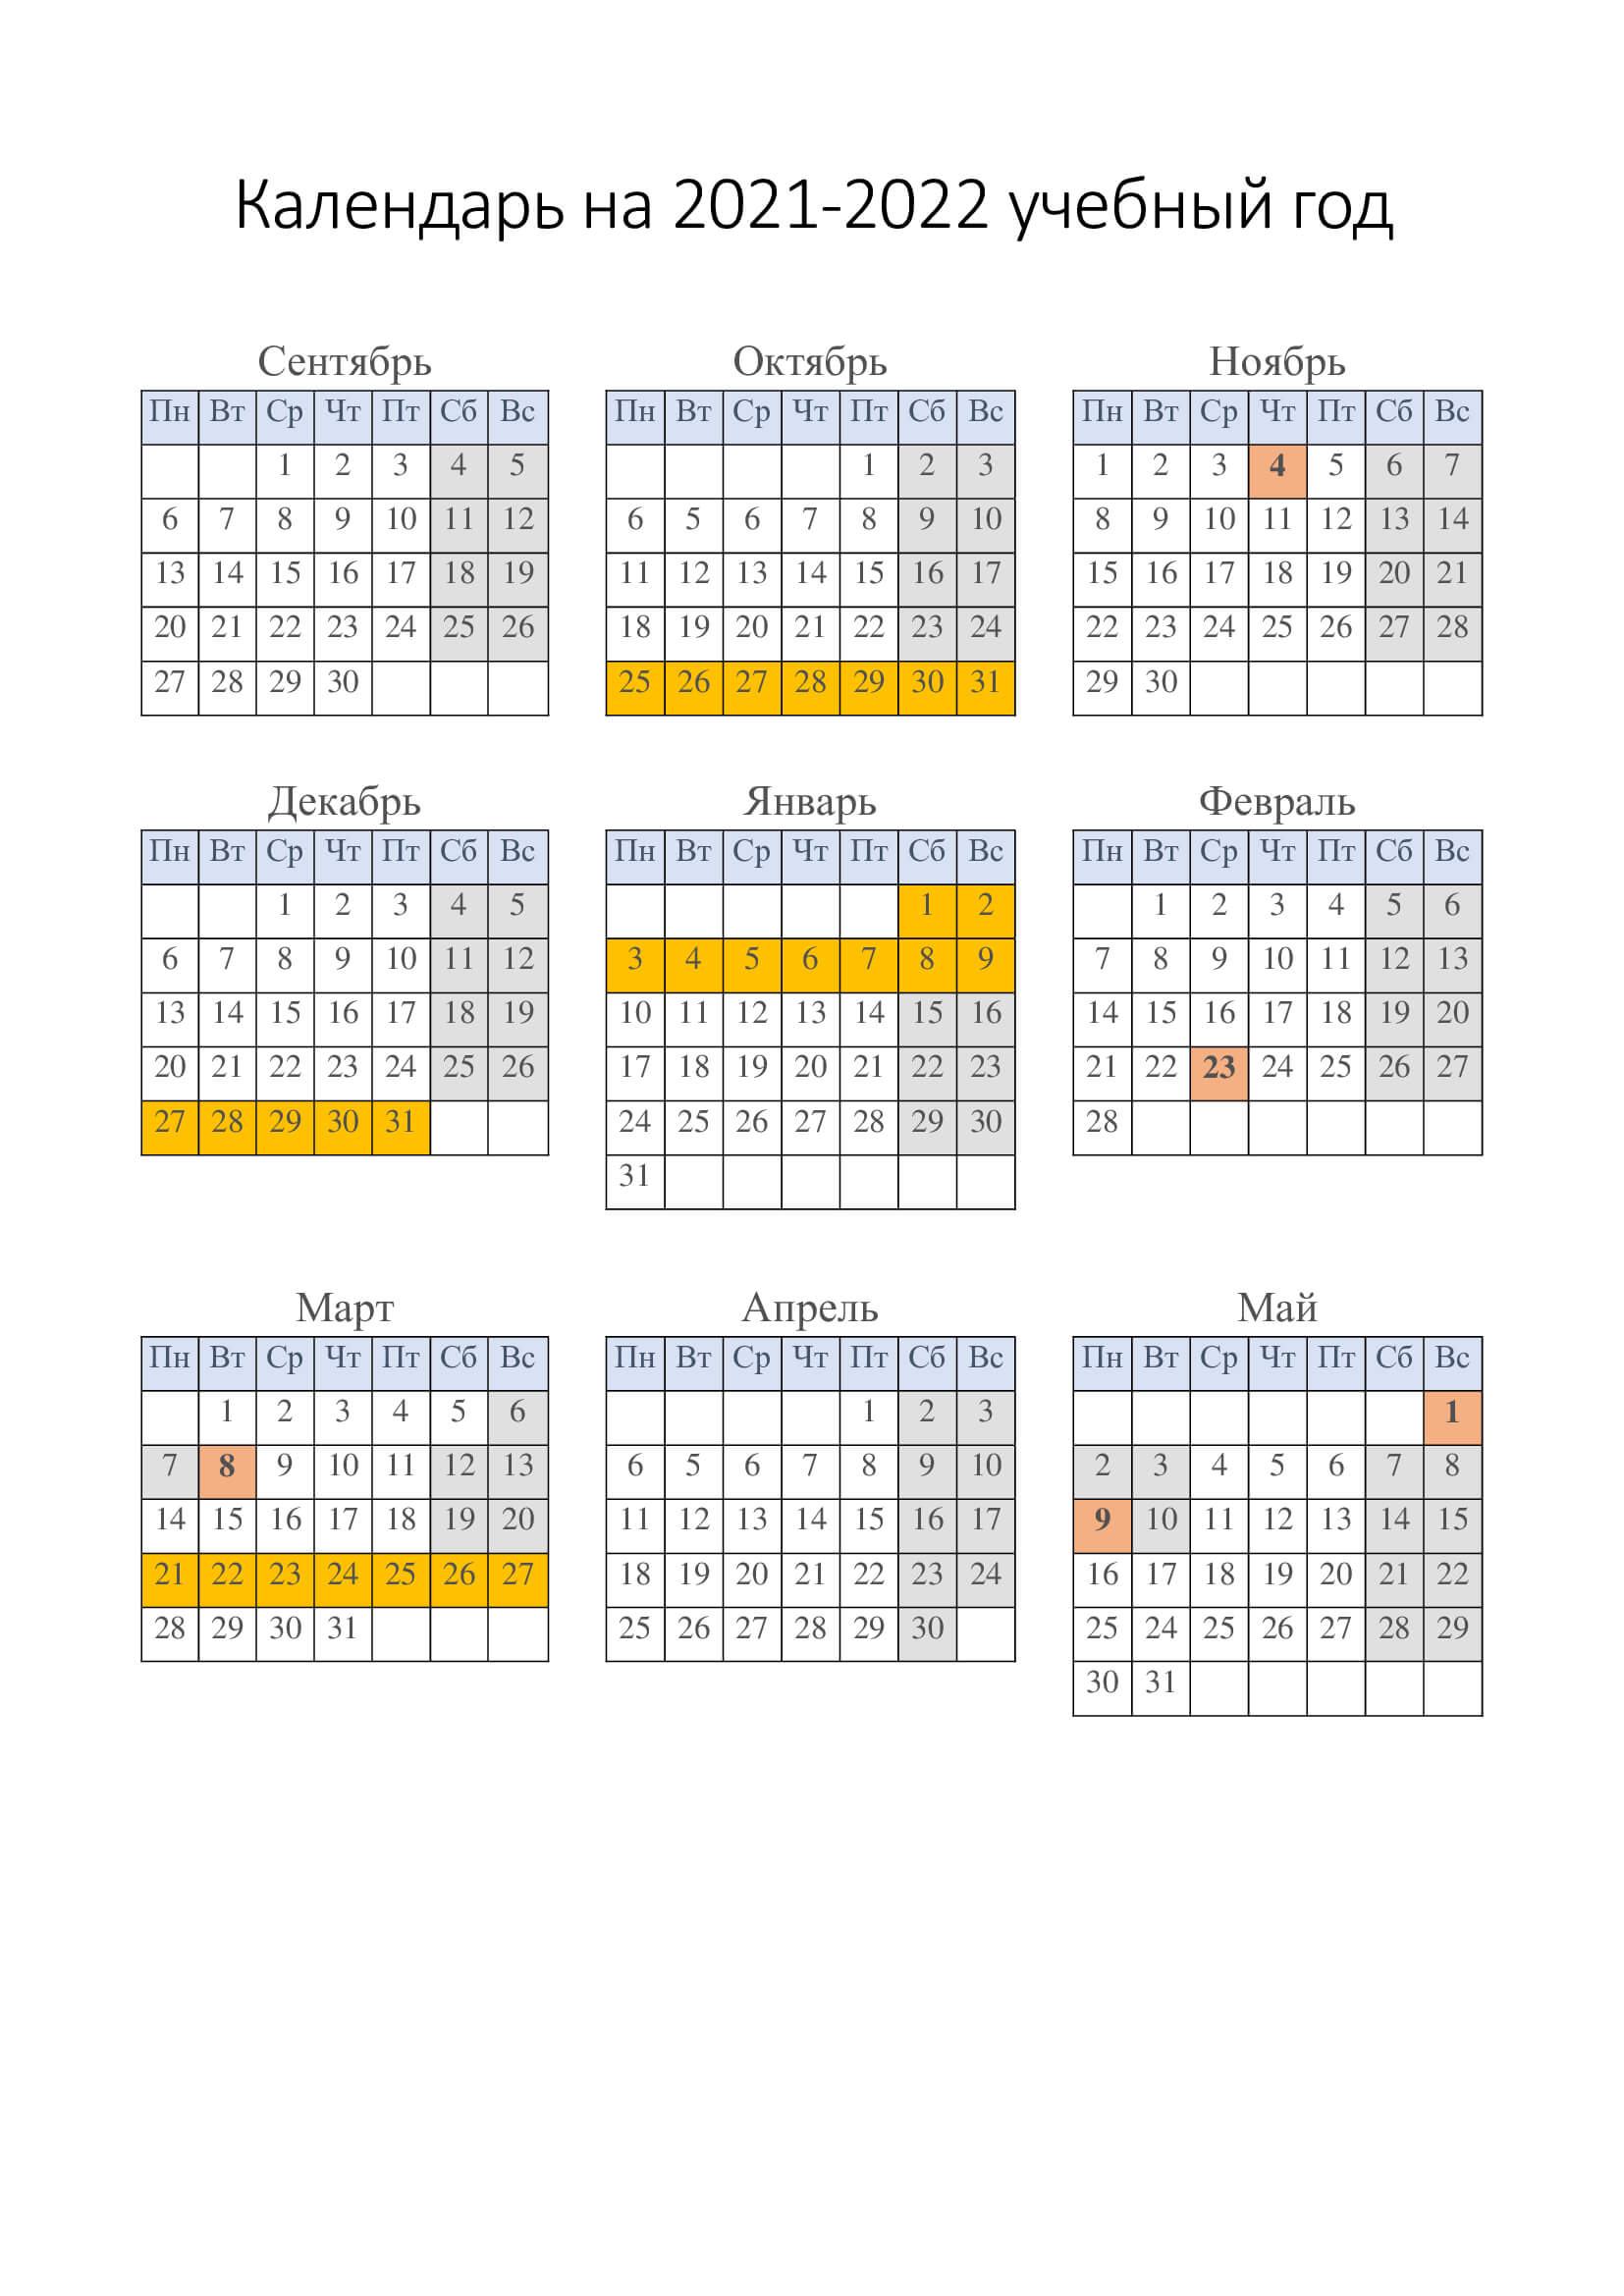 Учебный календарь 2021 года. Учебный календарь 2021-2022. Учебный календарь 2022 учебный год. Календарь 2022-2022 учебный год. Календарь на 2021-2022 учебный год с каникулами.